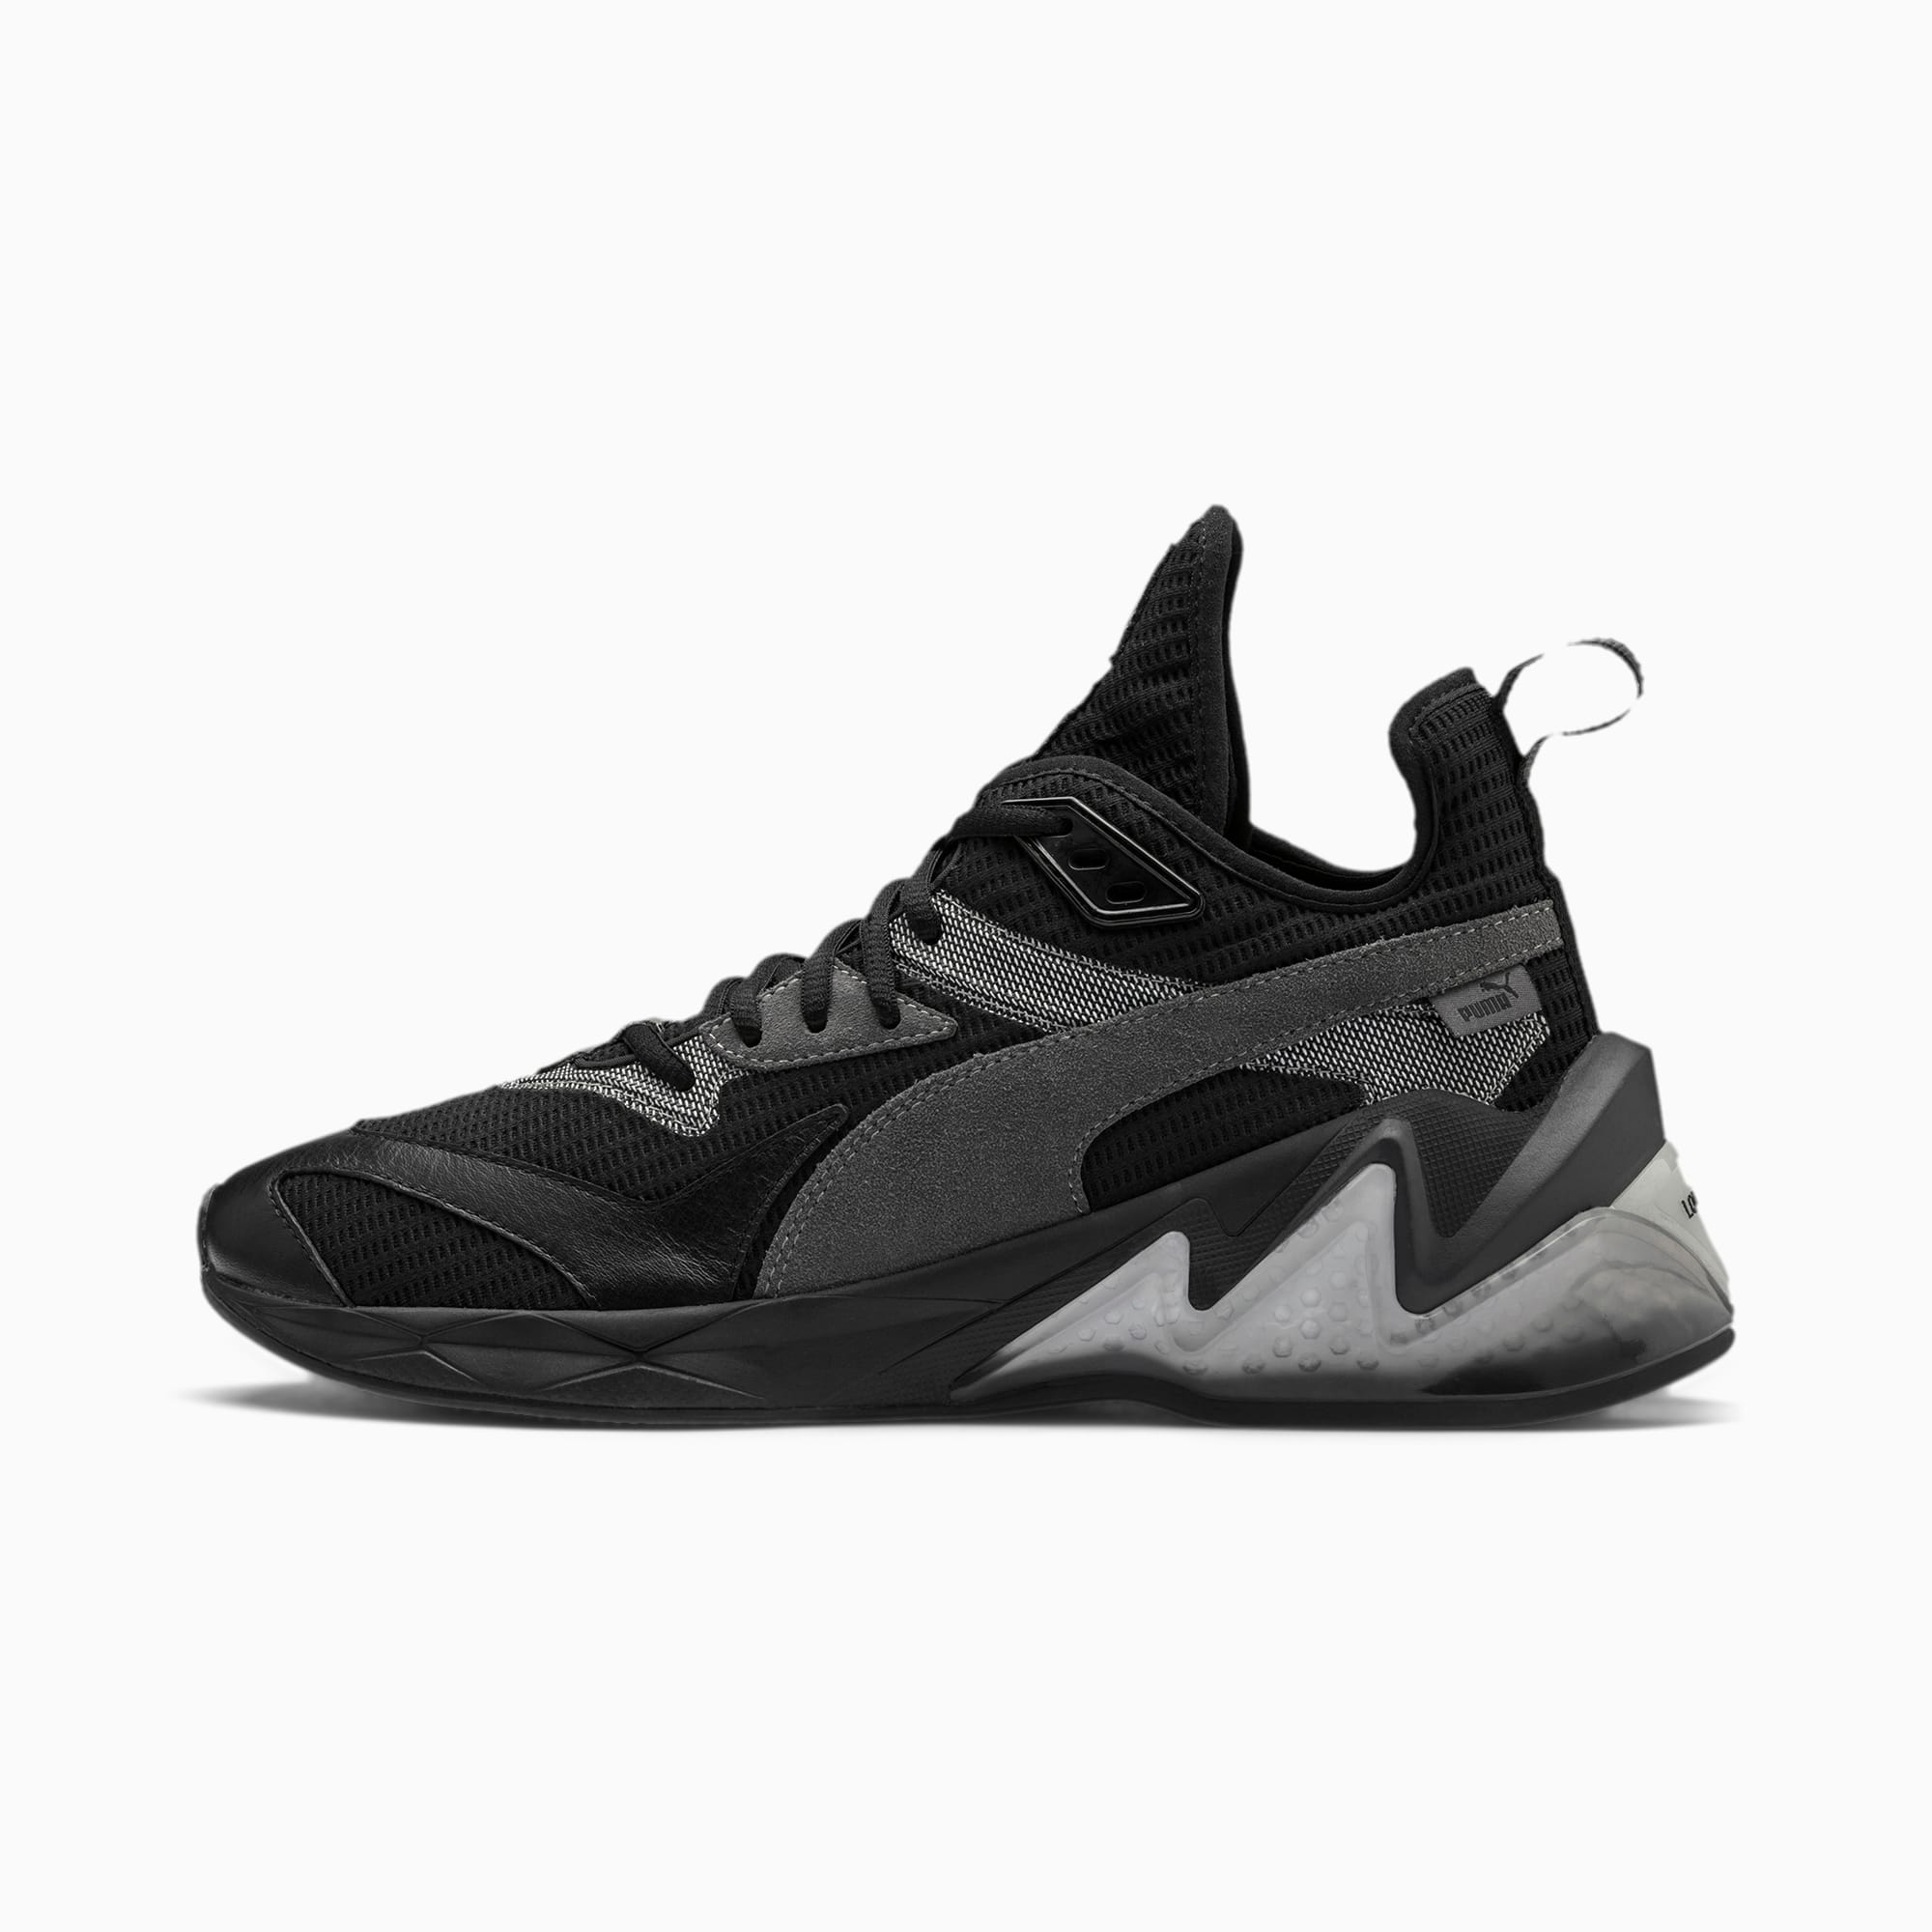 puma black and white sport shoes